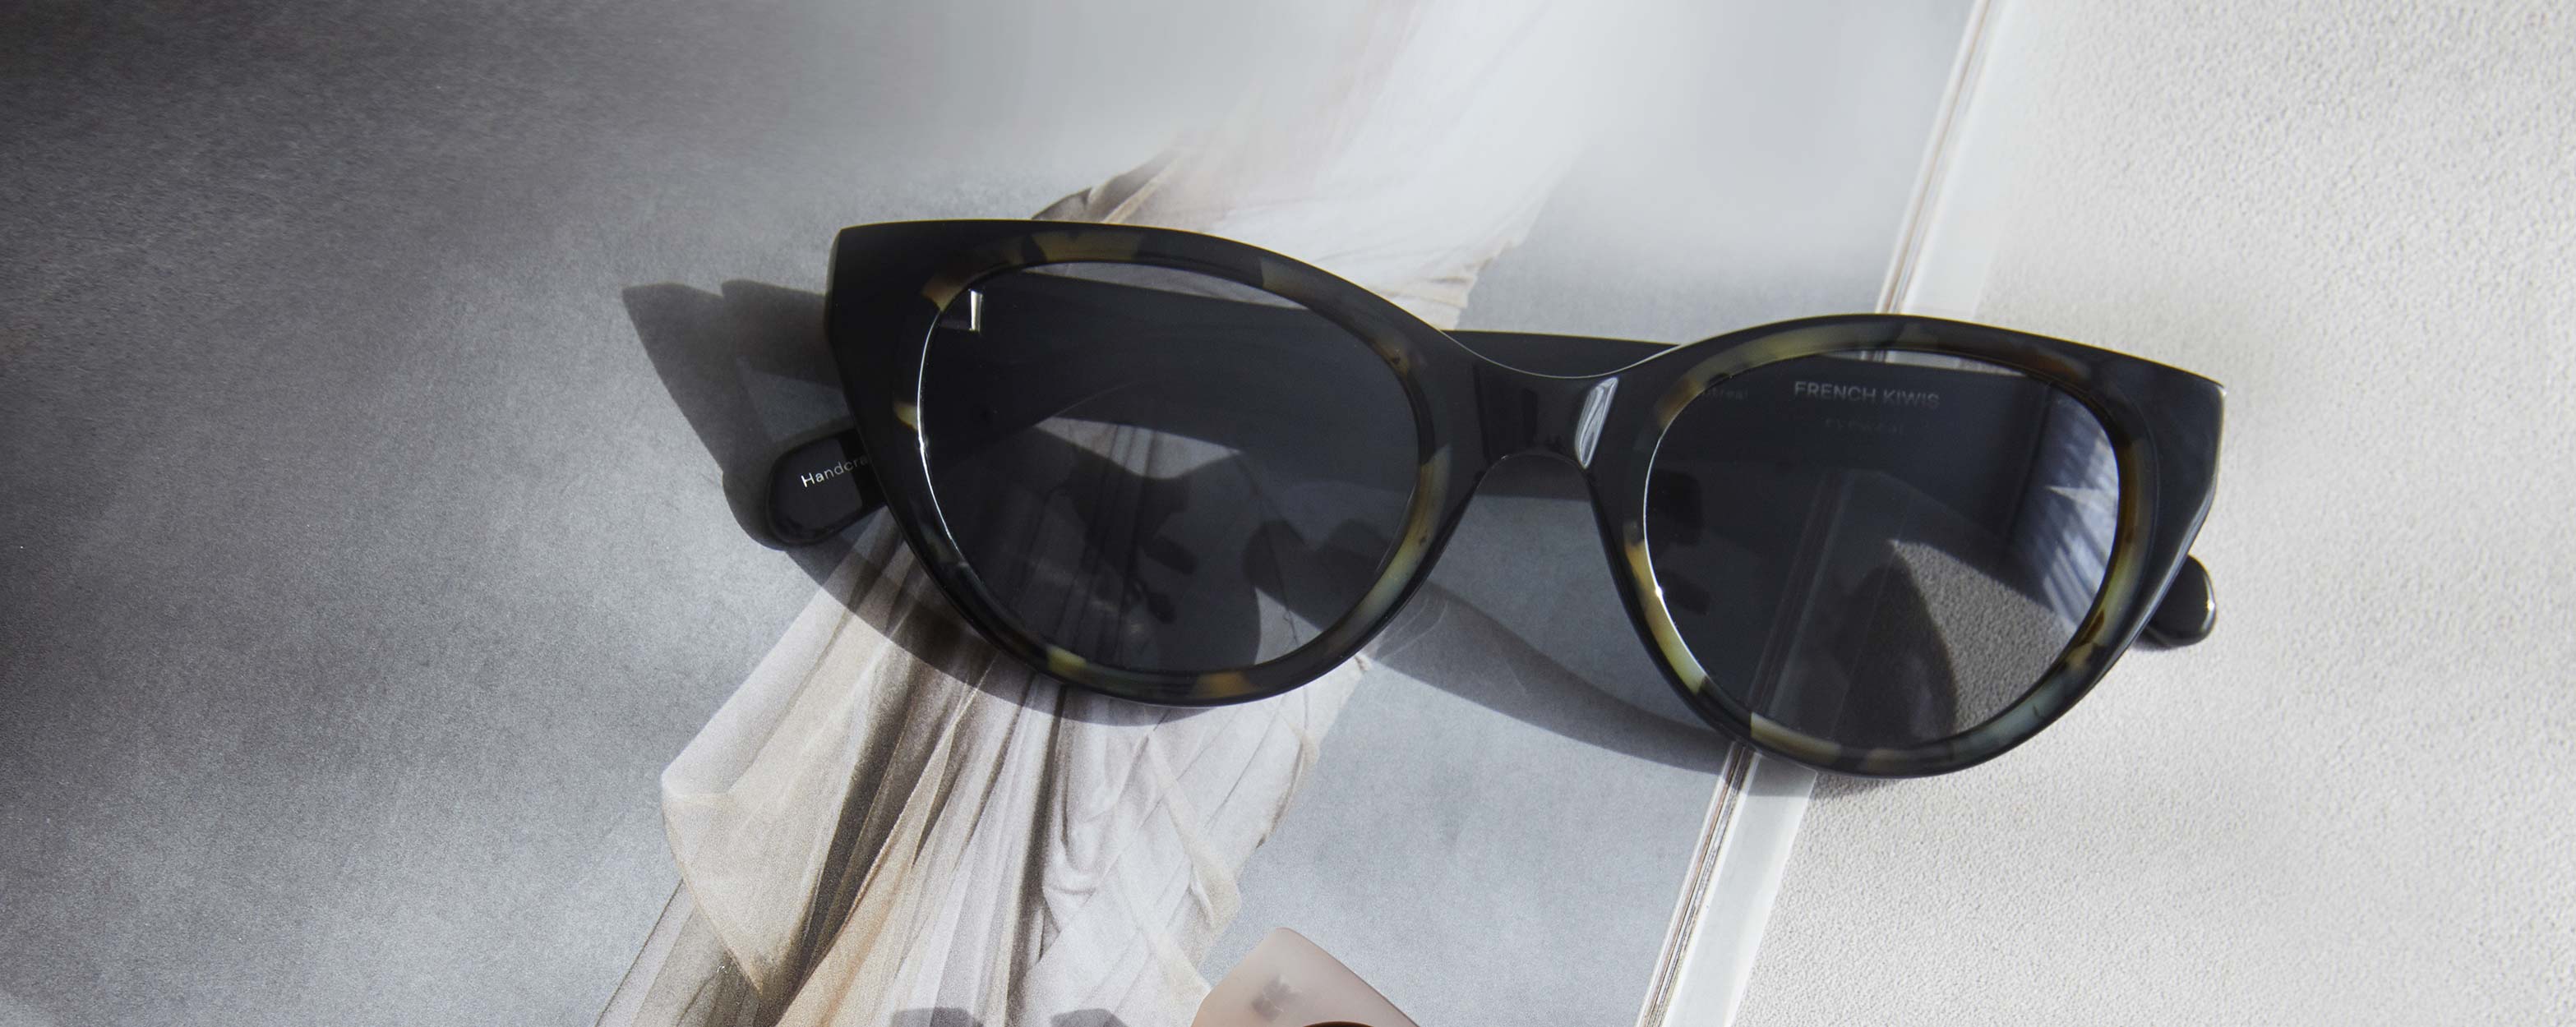 Photo Details of Colette Sun Creme Sun Glasses in a room